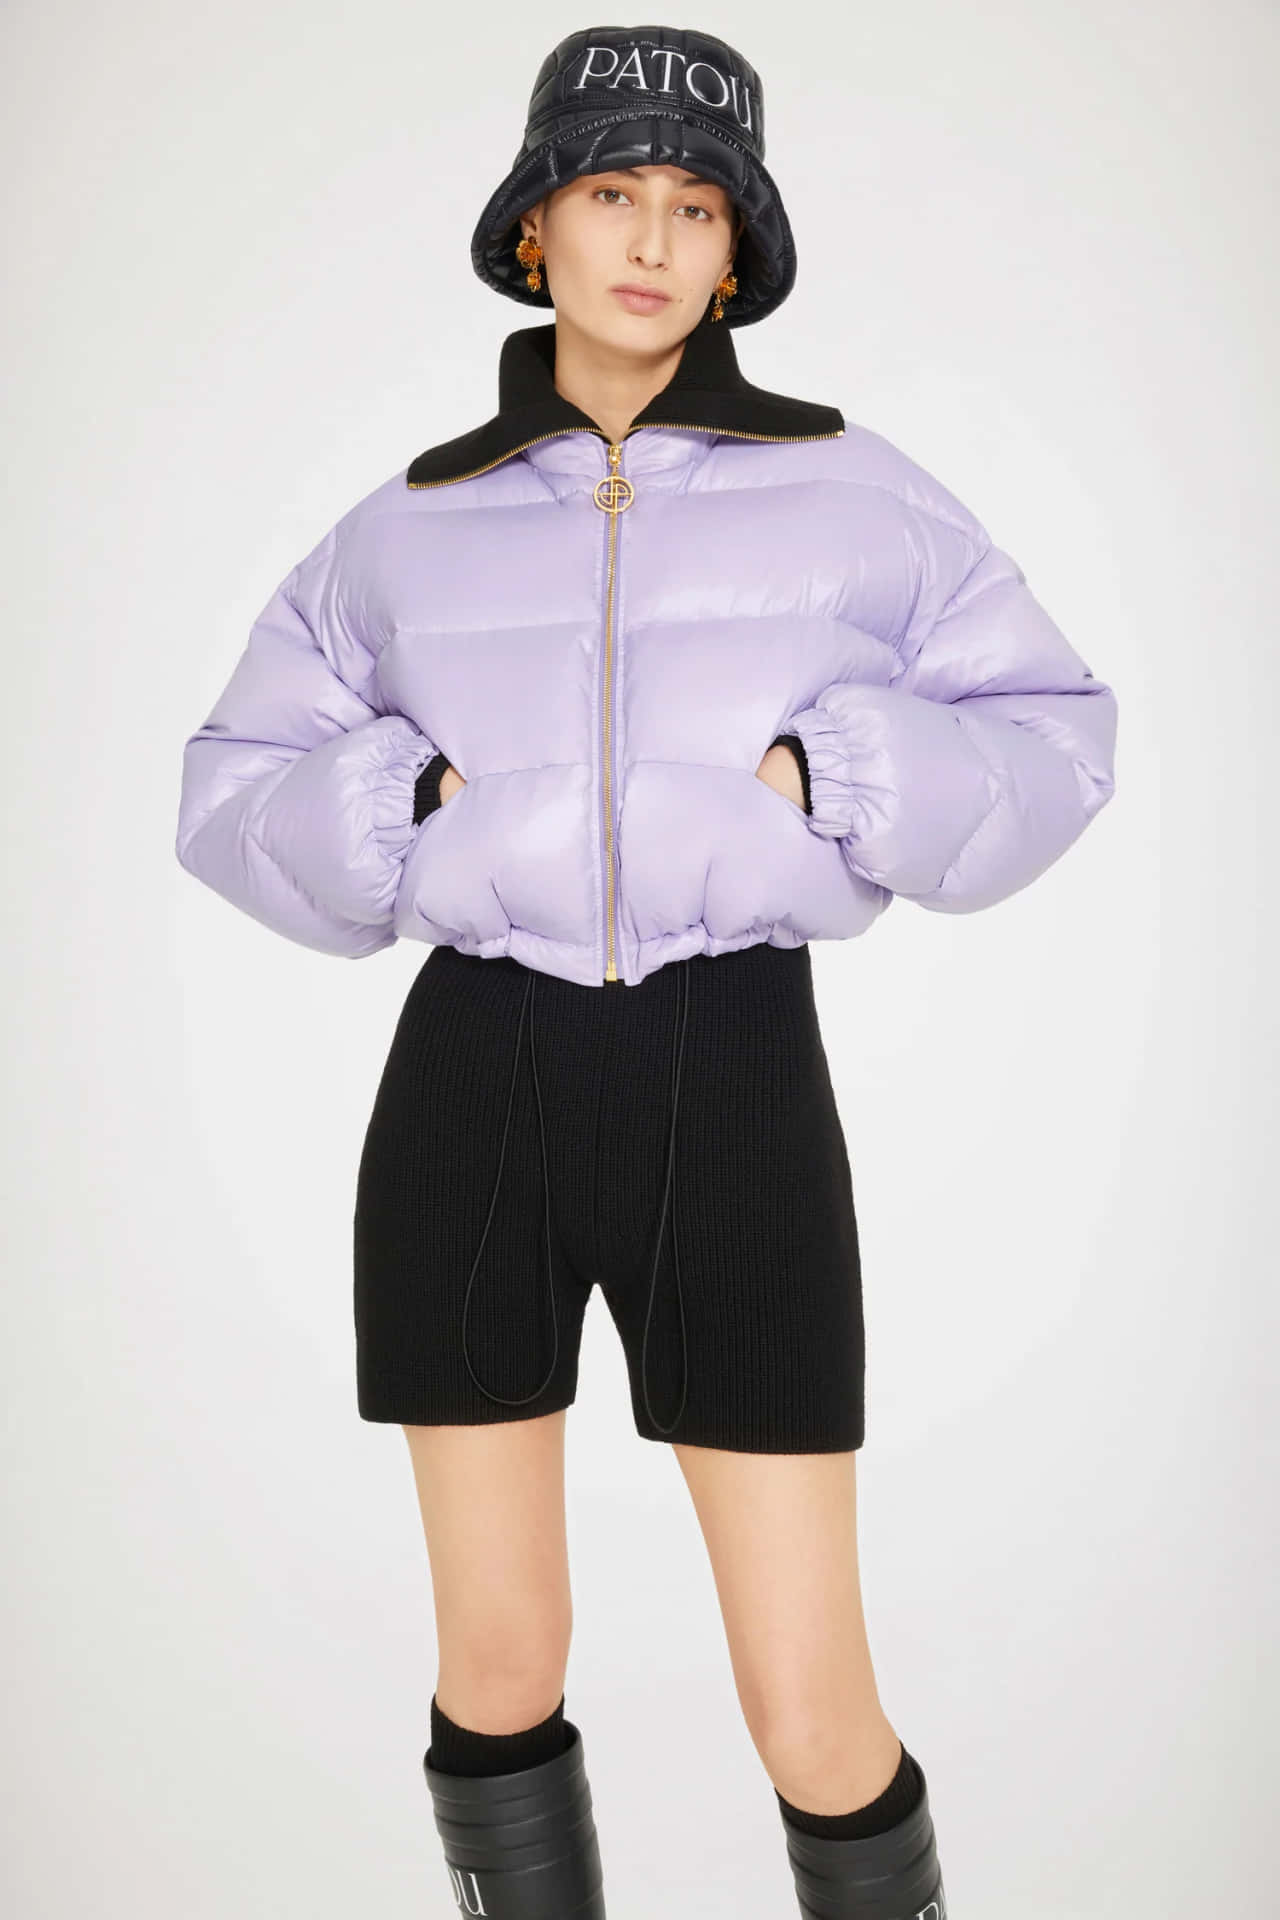 Stylish Woman in a Patou Purple Puffer Jacket Wallpaper